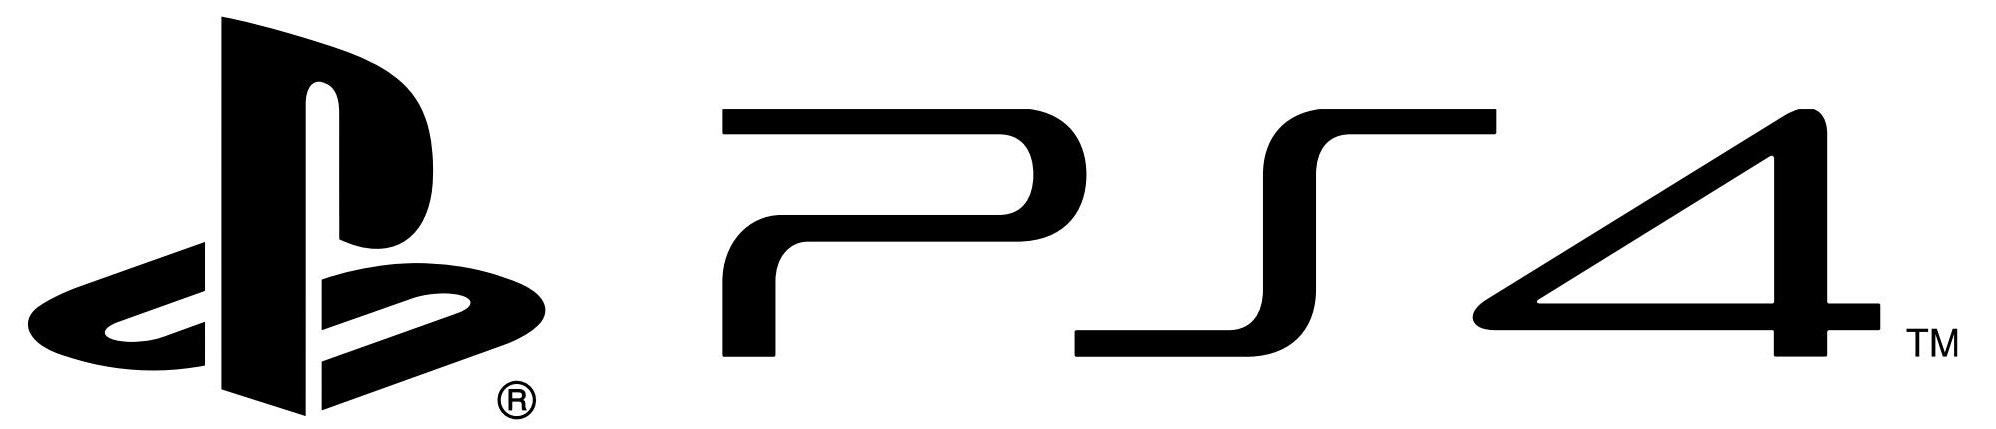 PlayStation 4 Logo photo - 1